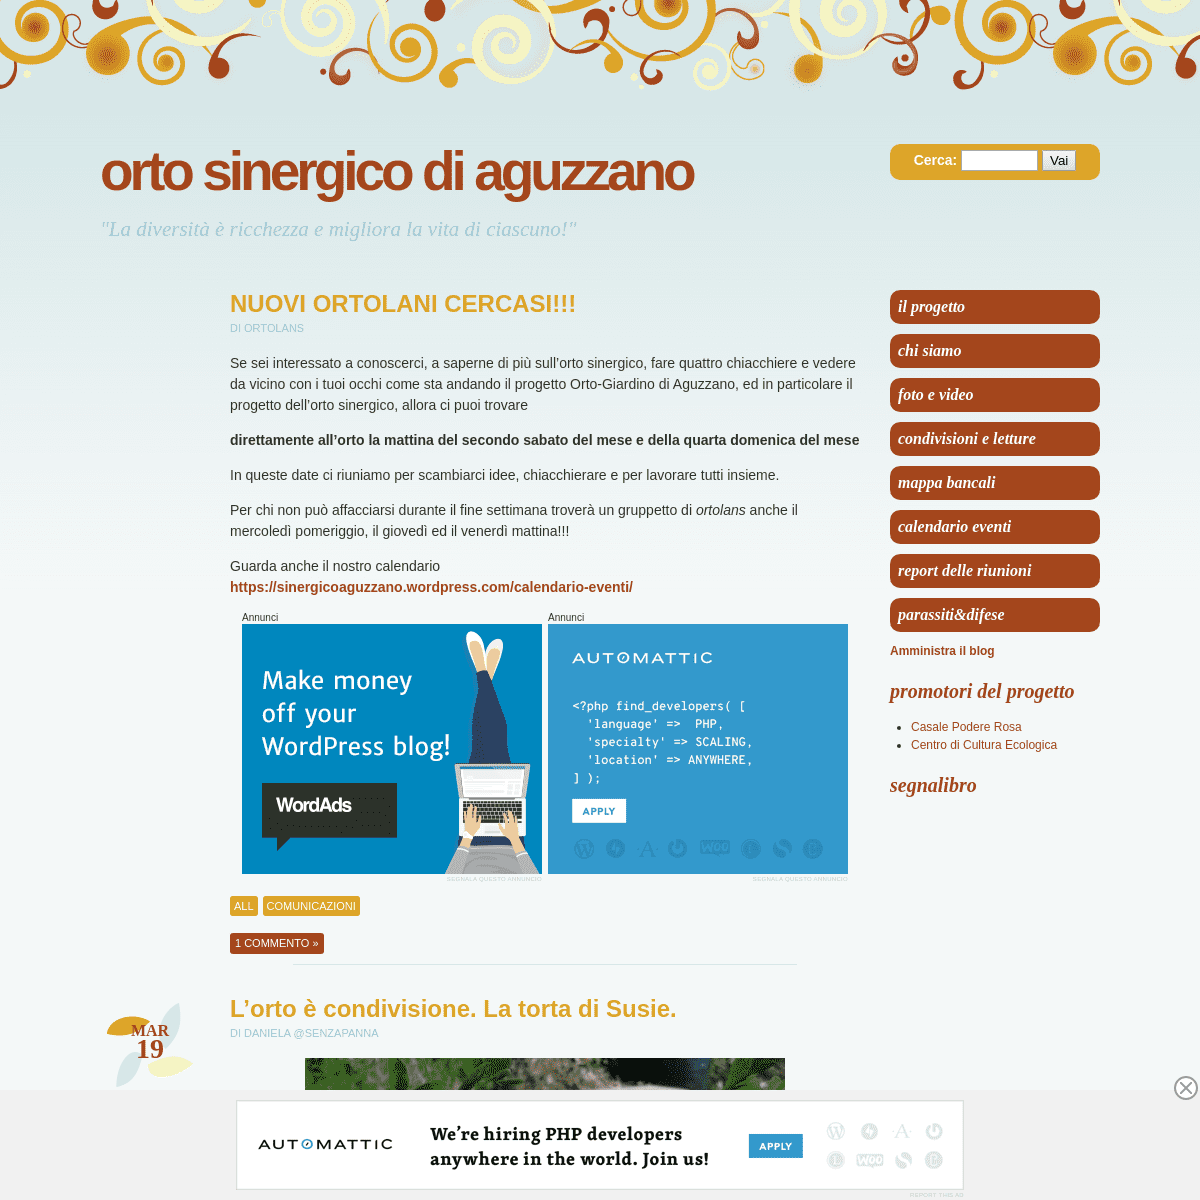 A complete backup of sinergicoaguzzano.wordpress.com